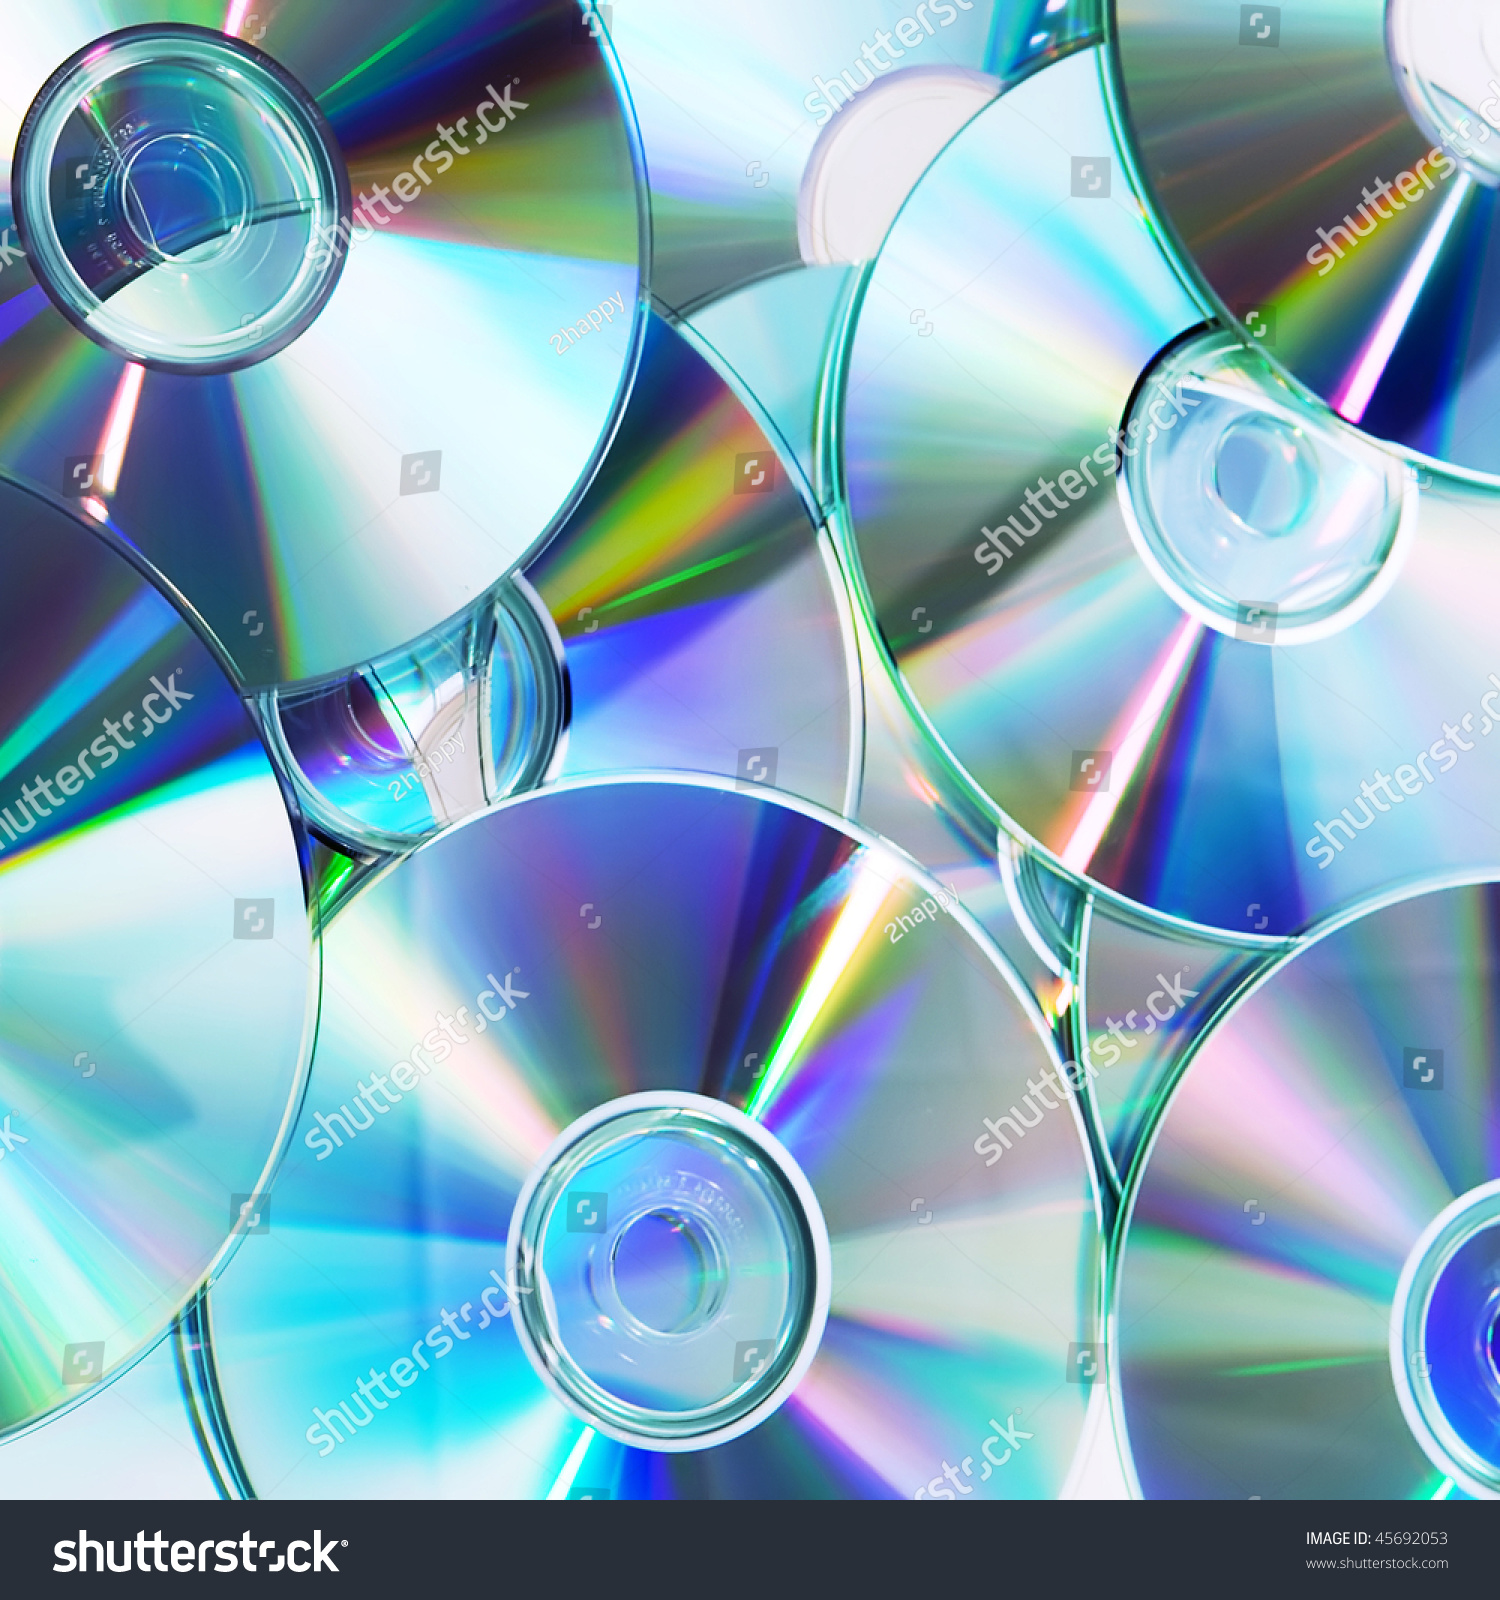 Heap Dvd Cd Disks Stock Photo (Download Now) 45692053 - Shutterstock